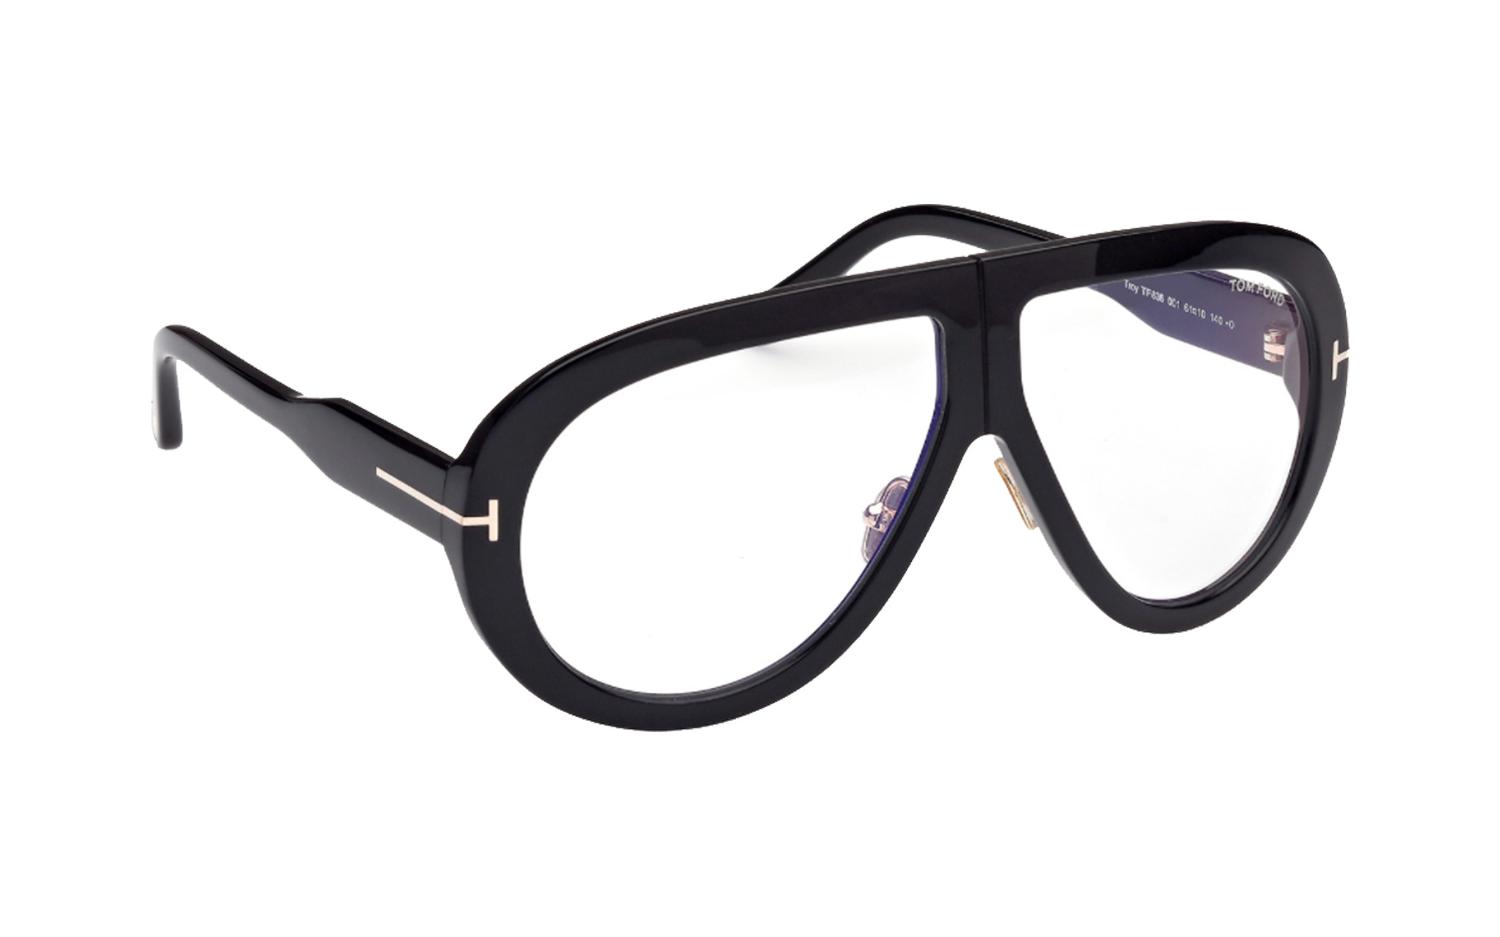 Tom Ford Sunglasses and Eyewear 2016